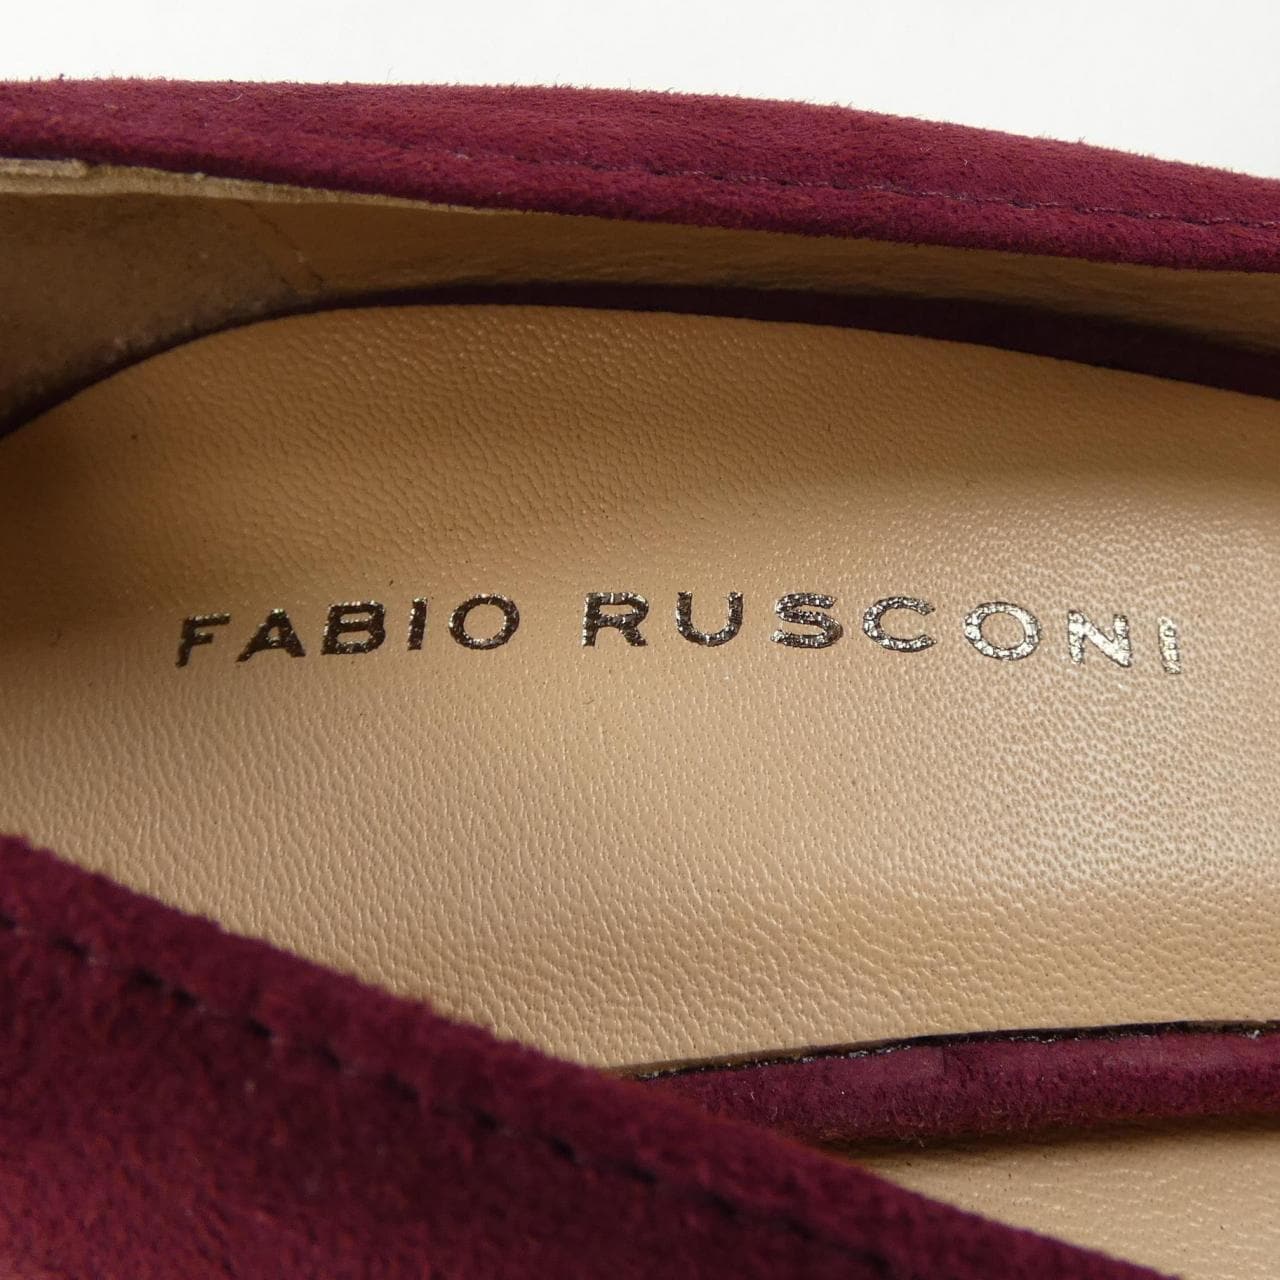 Fabio Rusconi Shoes